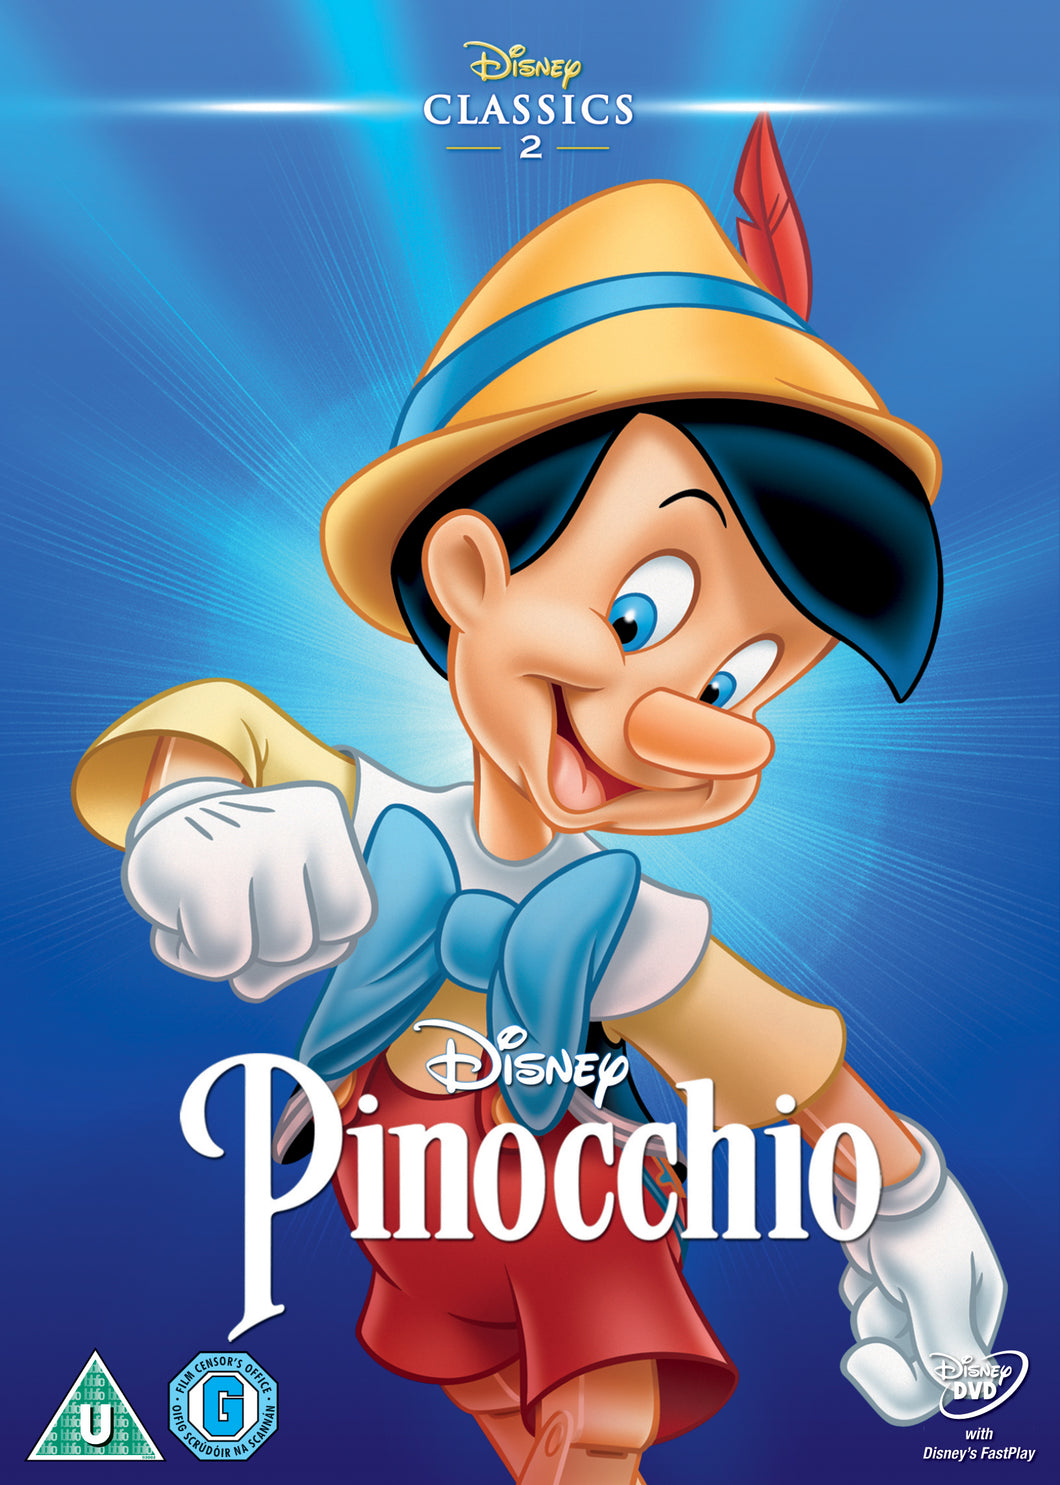 Disney Mystery Grab Bags (Pinocchio)